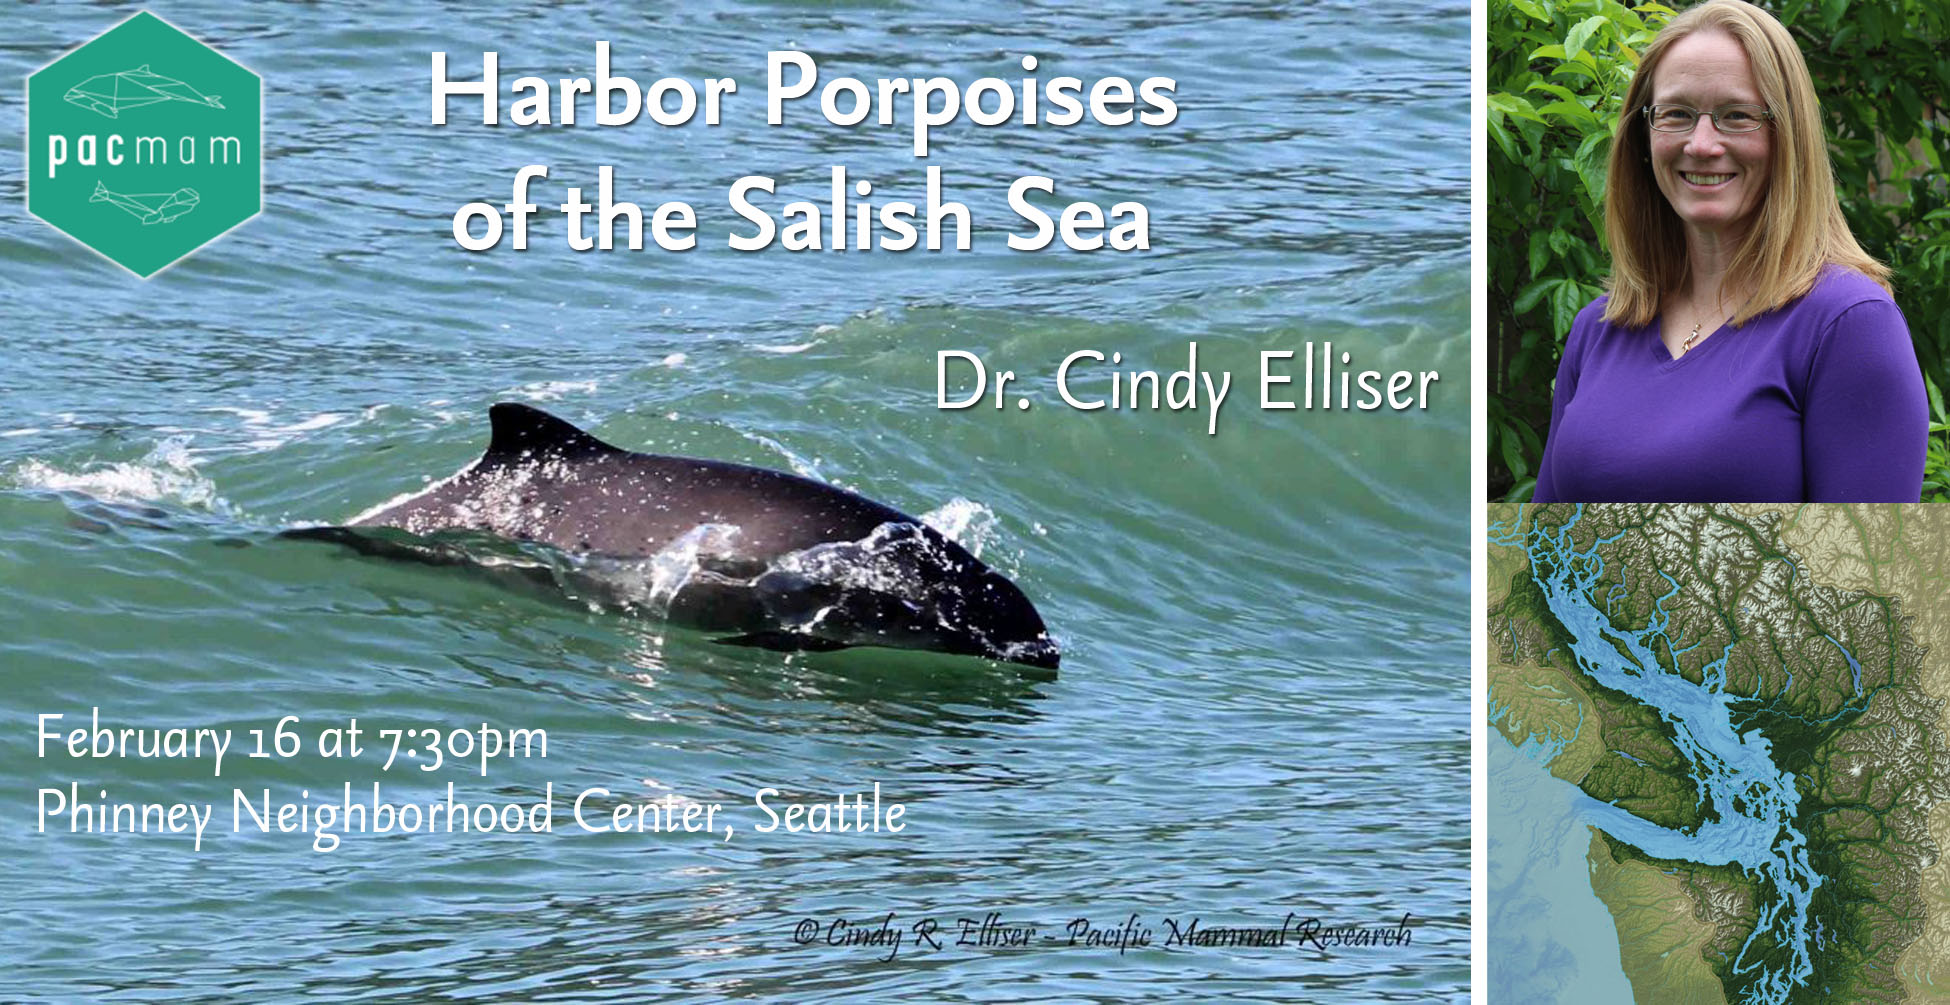 Dr. Cindy Elliser, PacMam, Harbor Porpoises of the Salish Sea